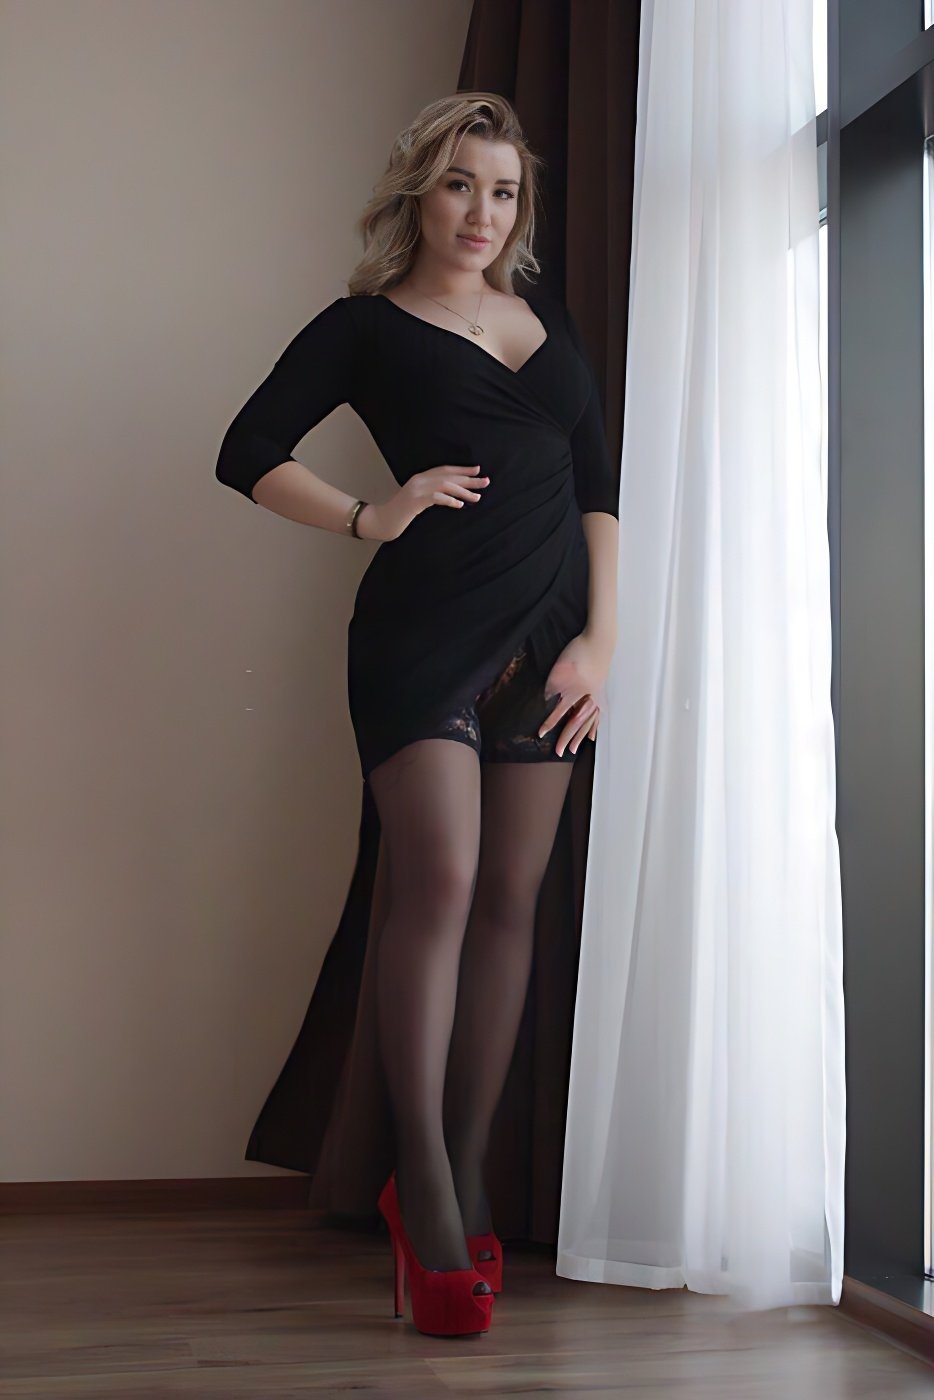 Meet Amazing Simona: Top Escort Girl - model preview photo 1 